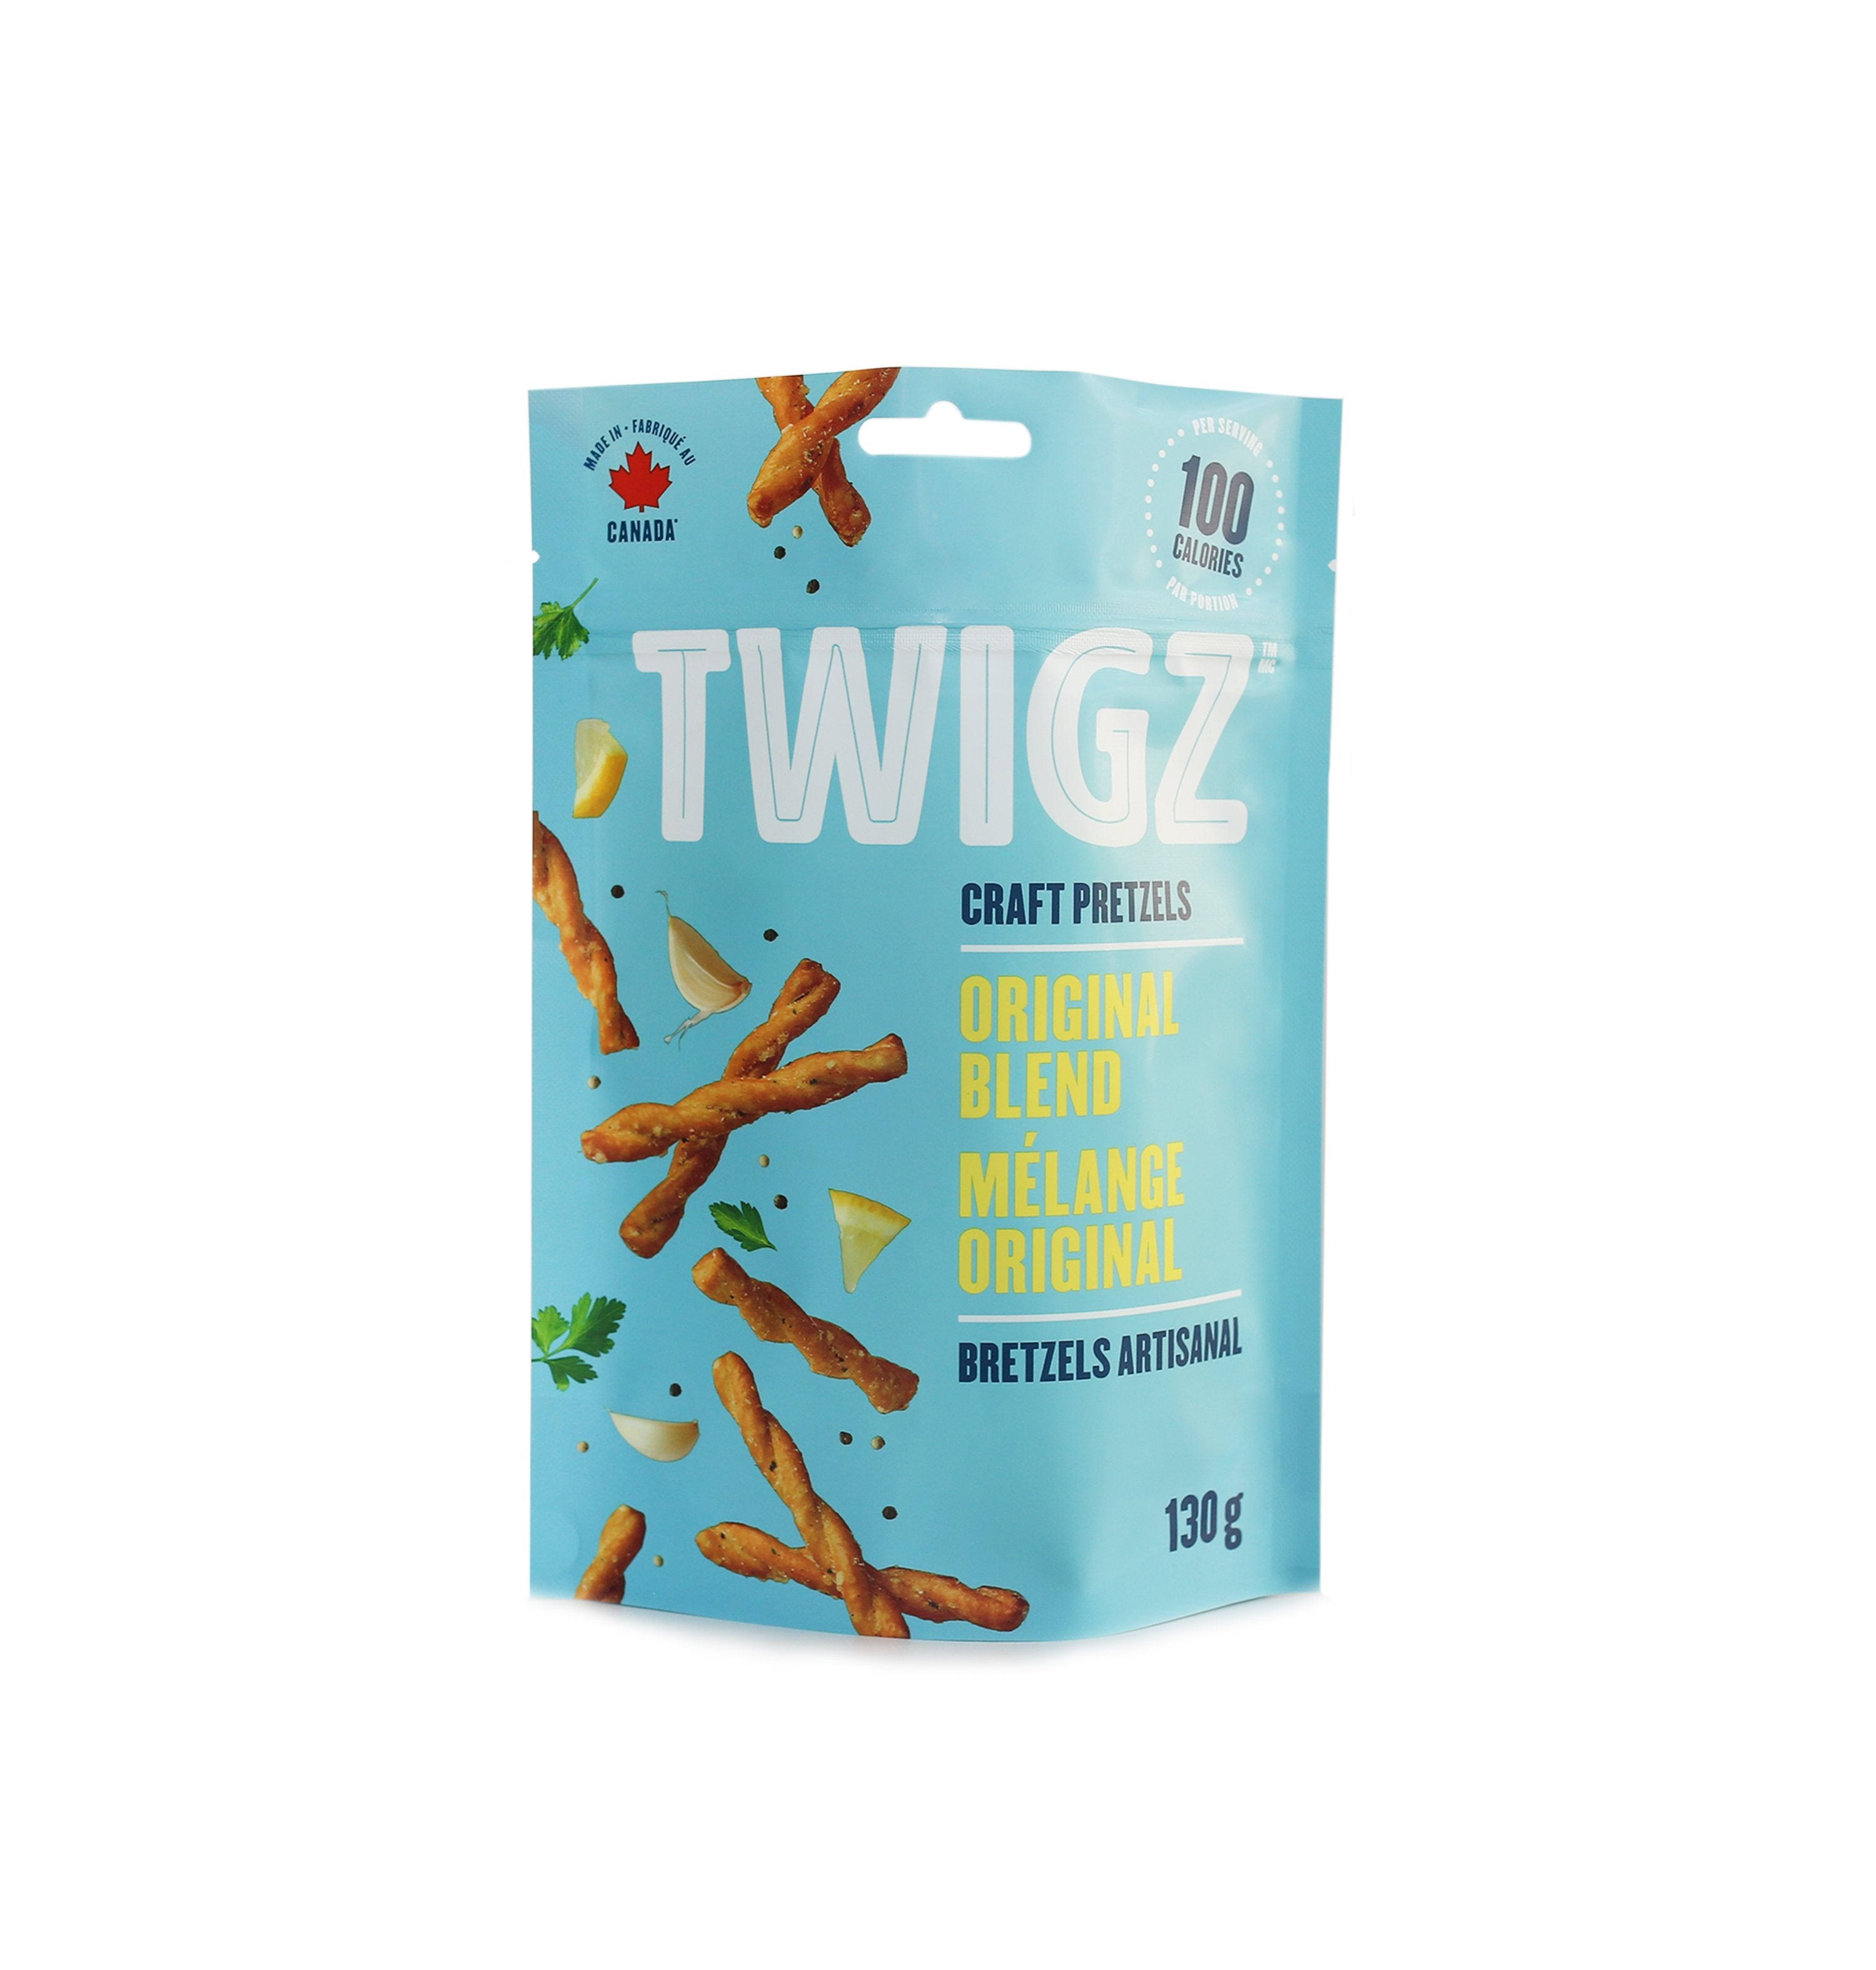 Twigz Original Blend Craft Pretzels - 130 g